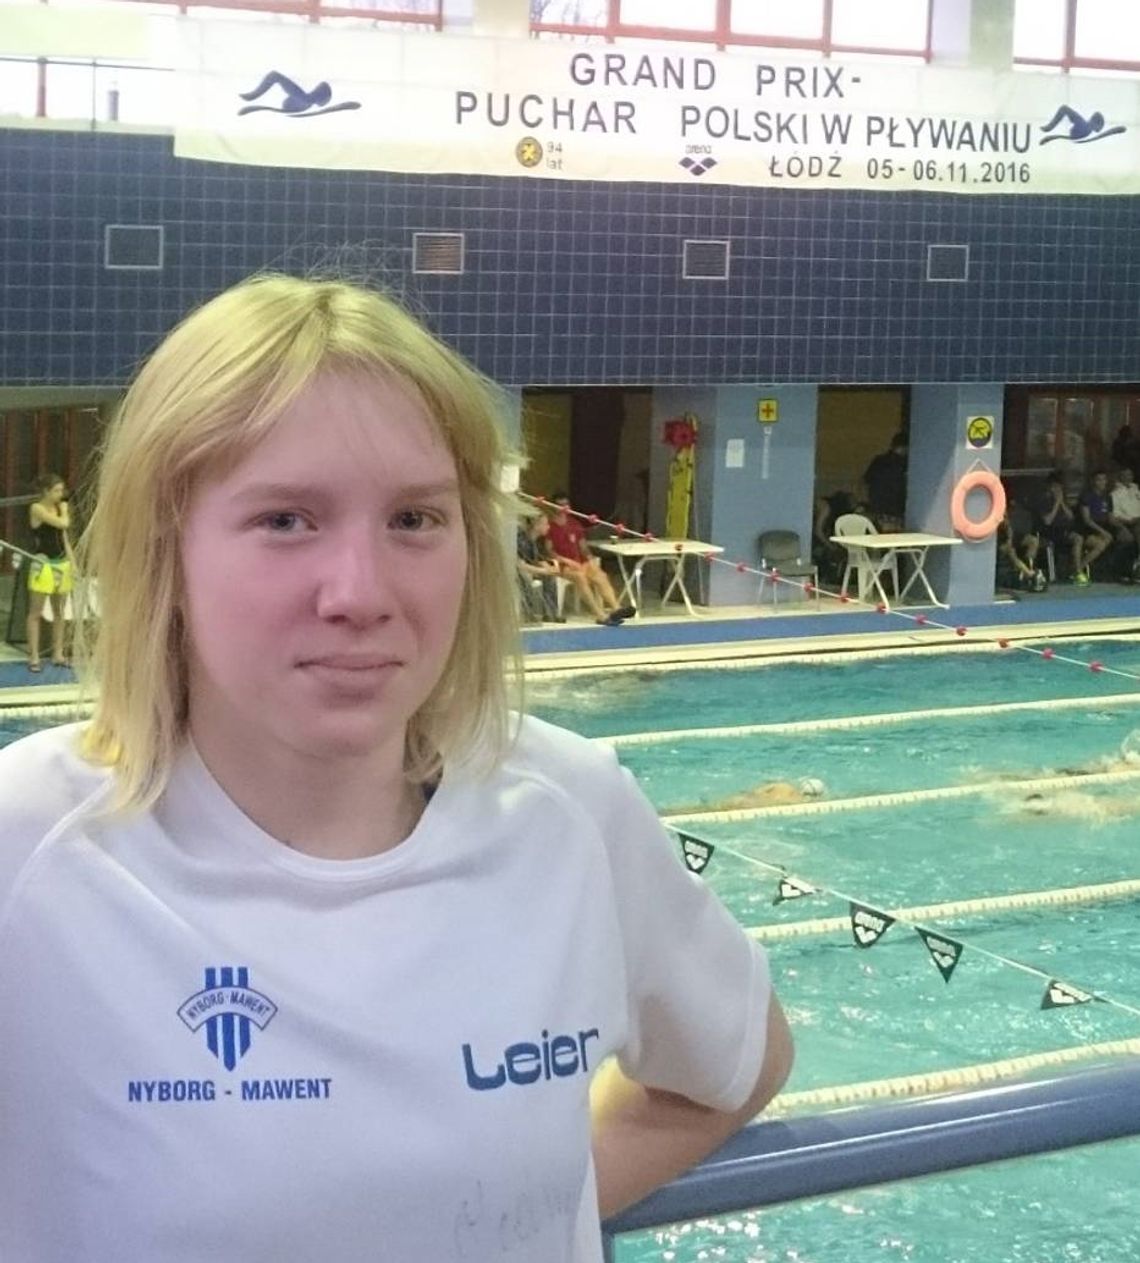 Malborska pływaczka w Grand Prix Polski